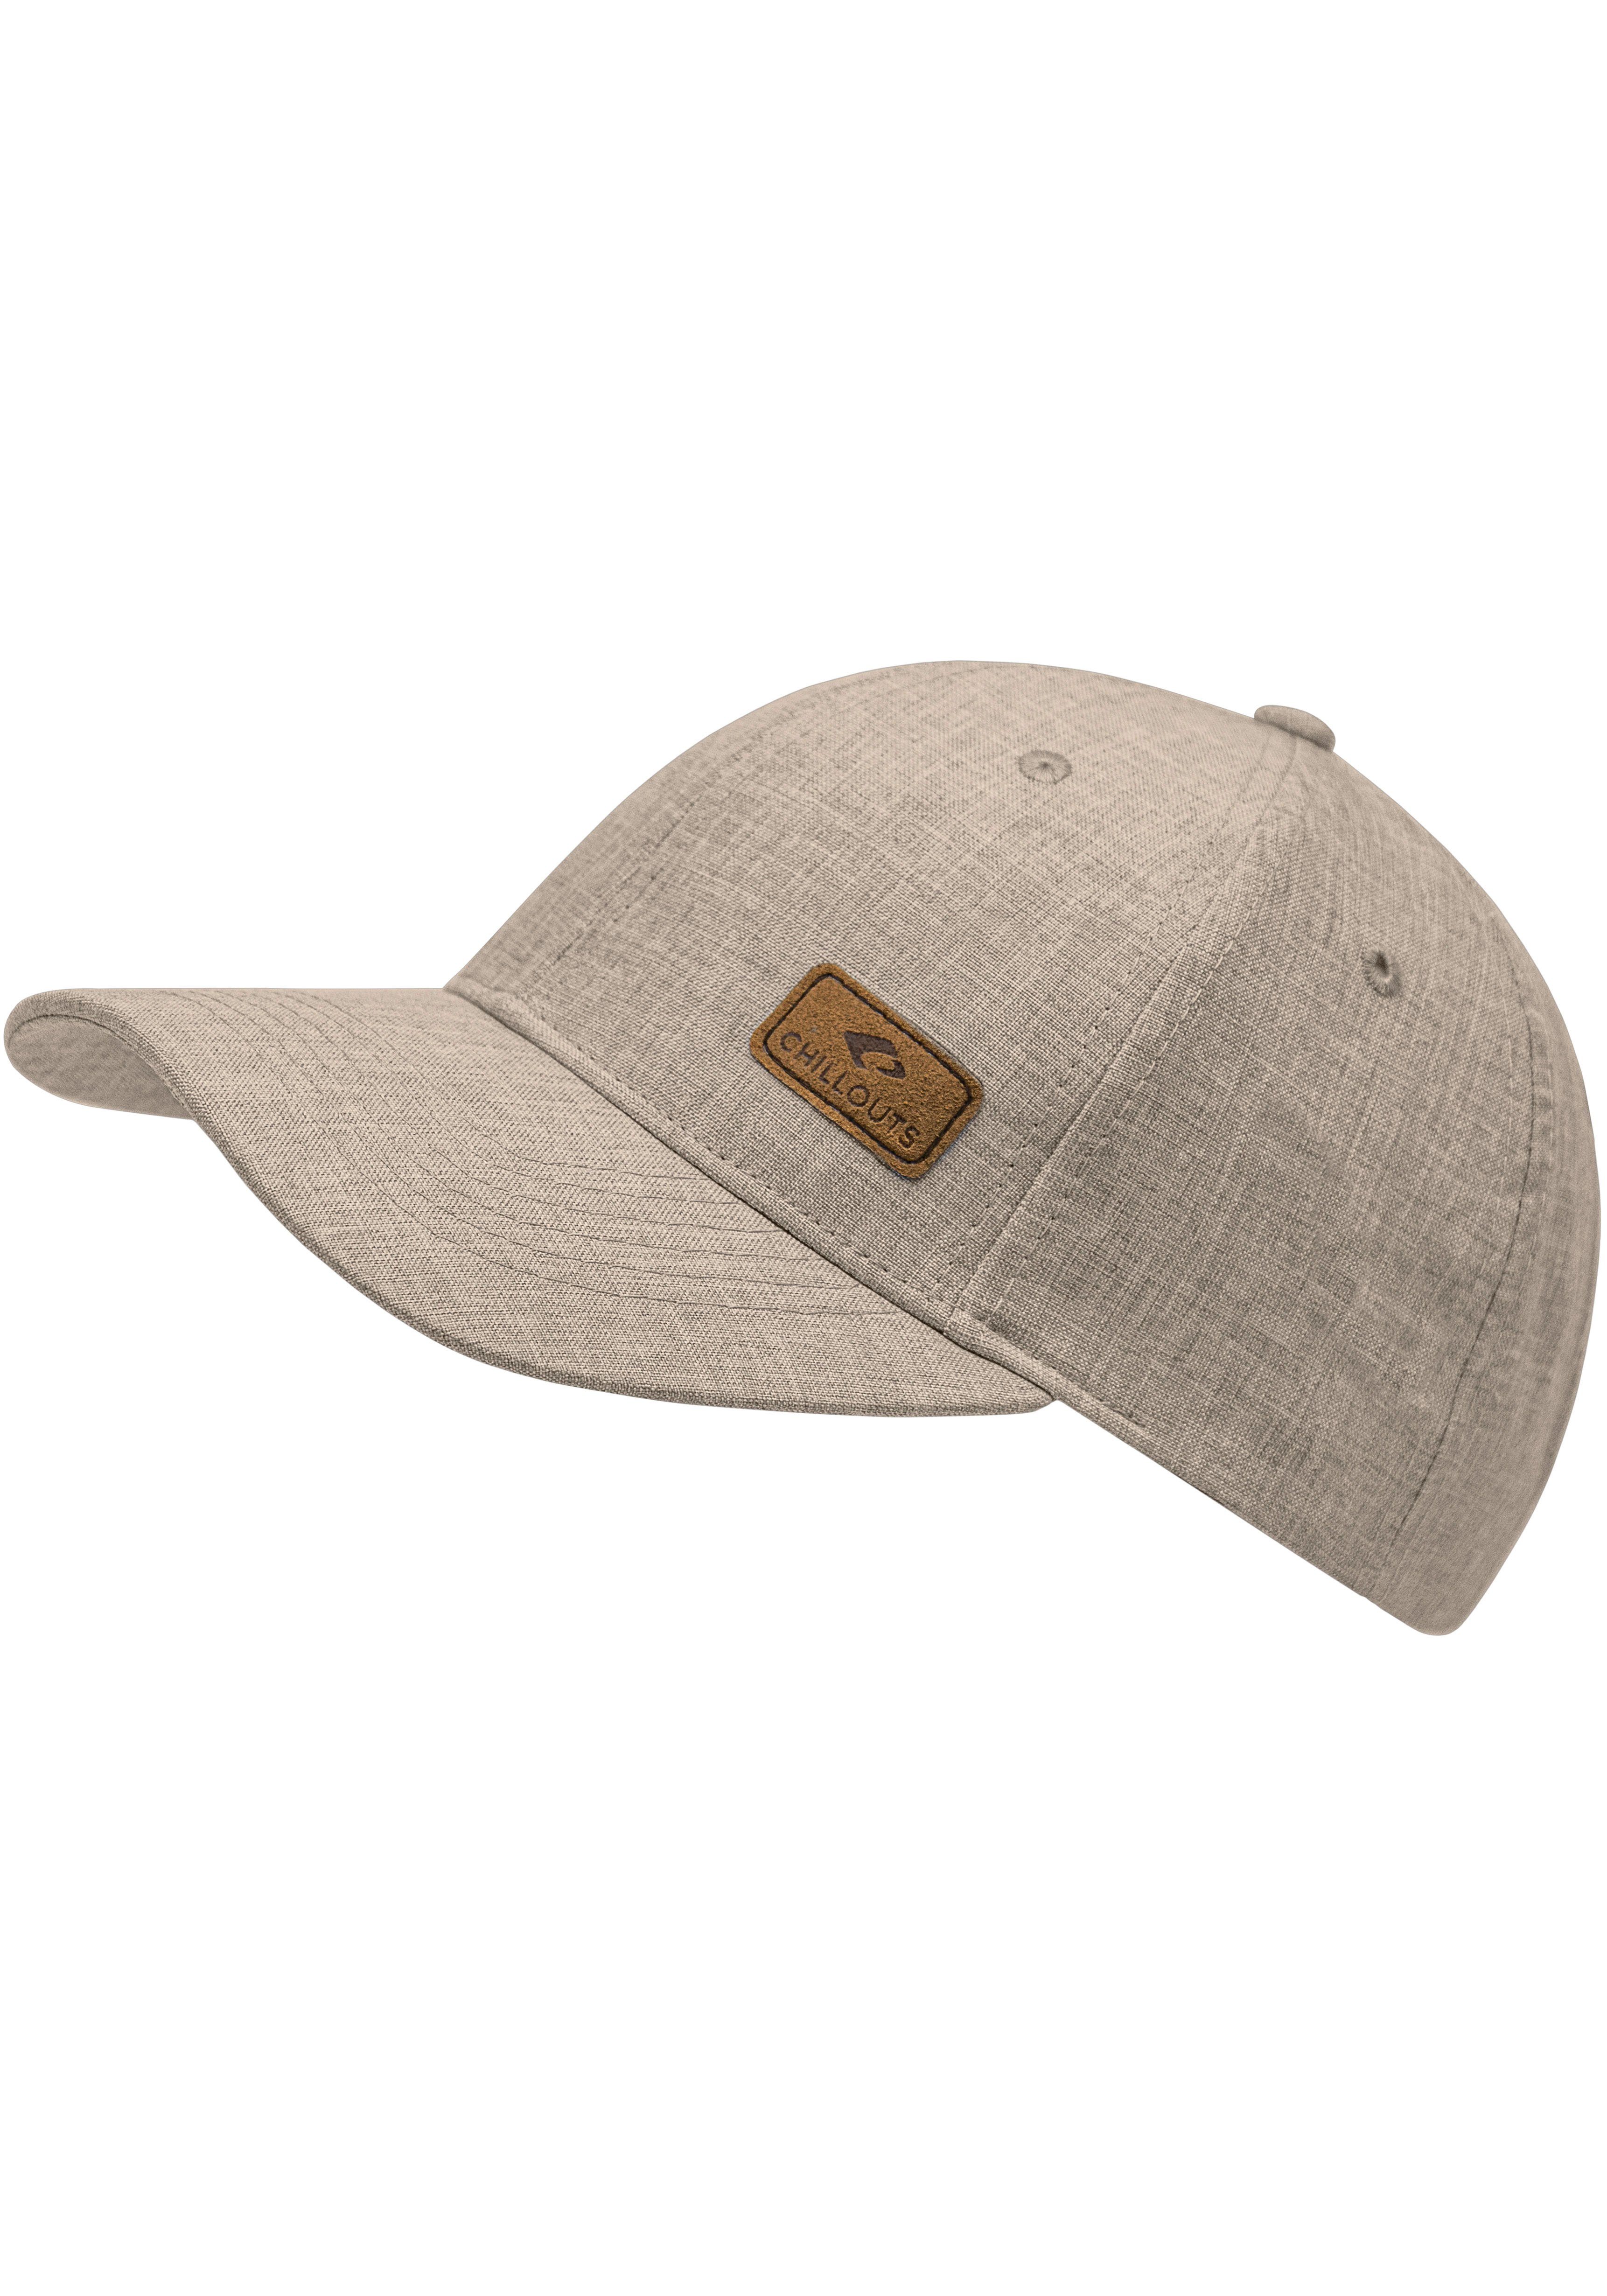 Amadora in Hat Baseball Cap beige verstellbar Optik, Size, chillouts melierter One